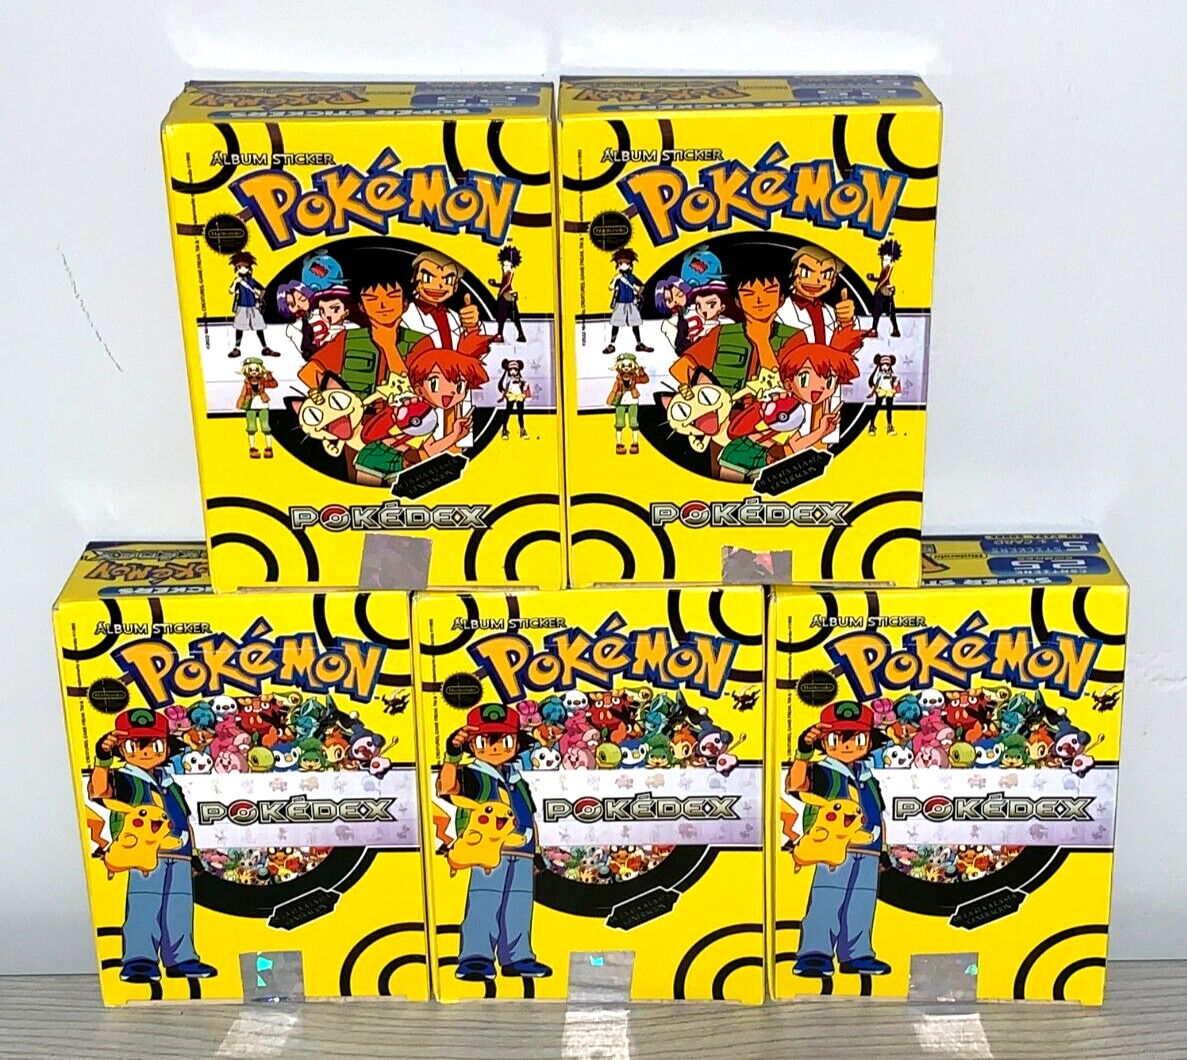 5 BOXES - 2022 BOX POKEMON POKEDEX Vol. II - 125 Sealed Packs (Stickers & Cards)